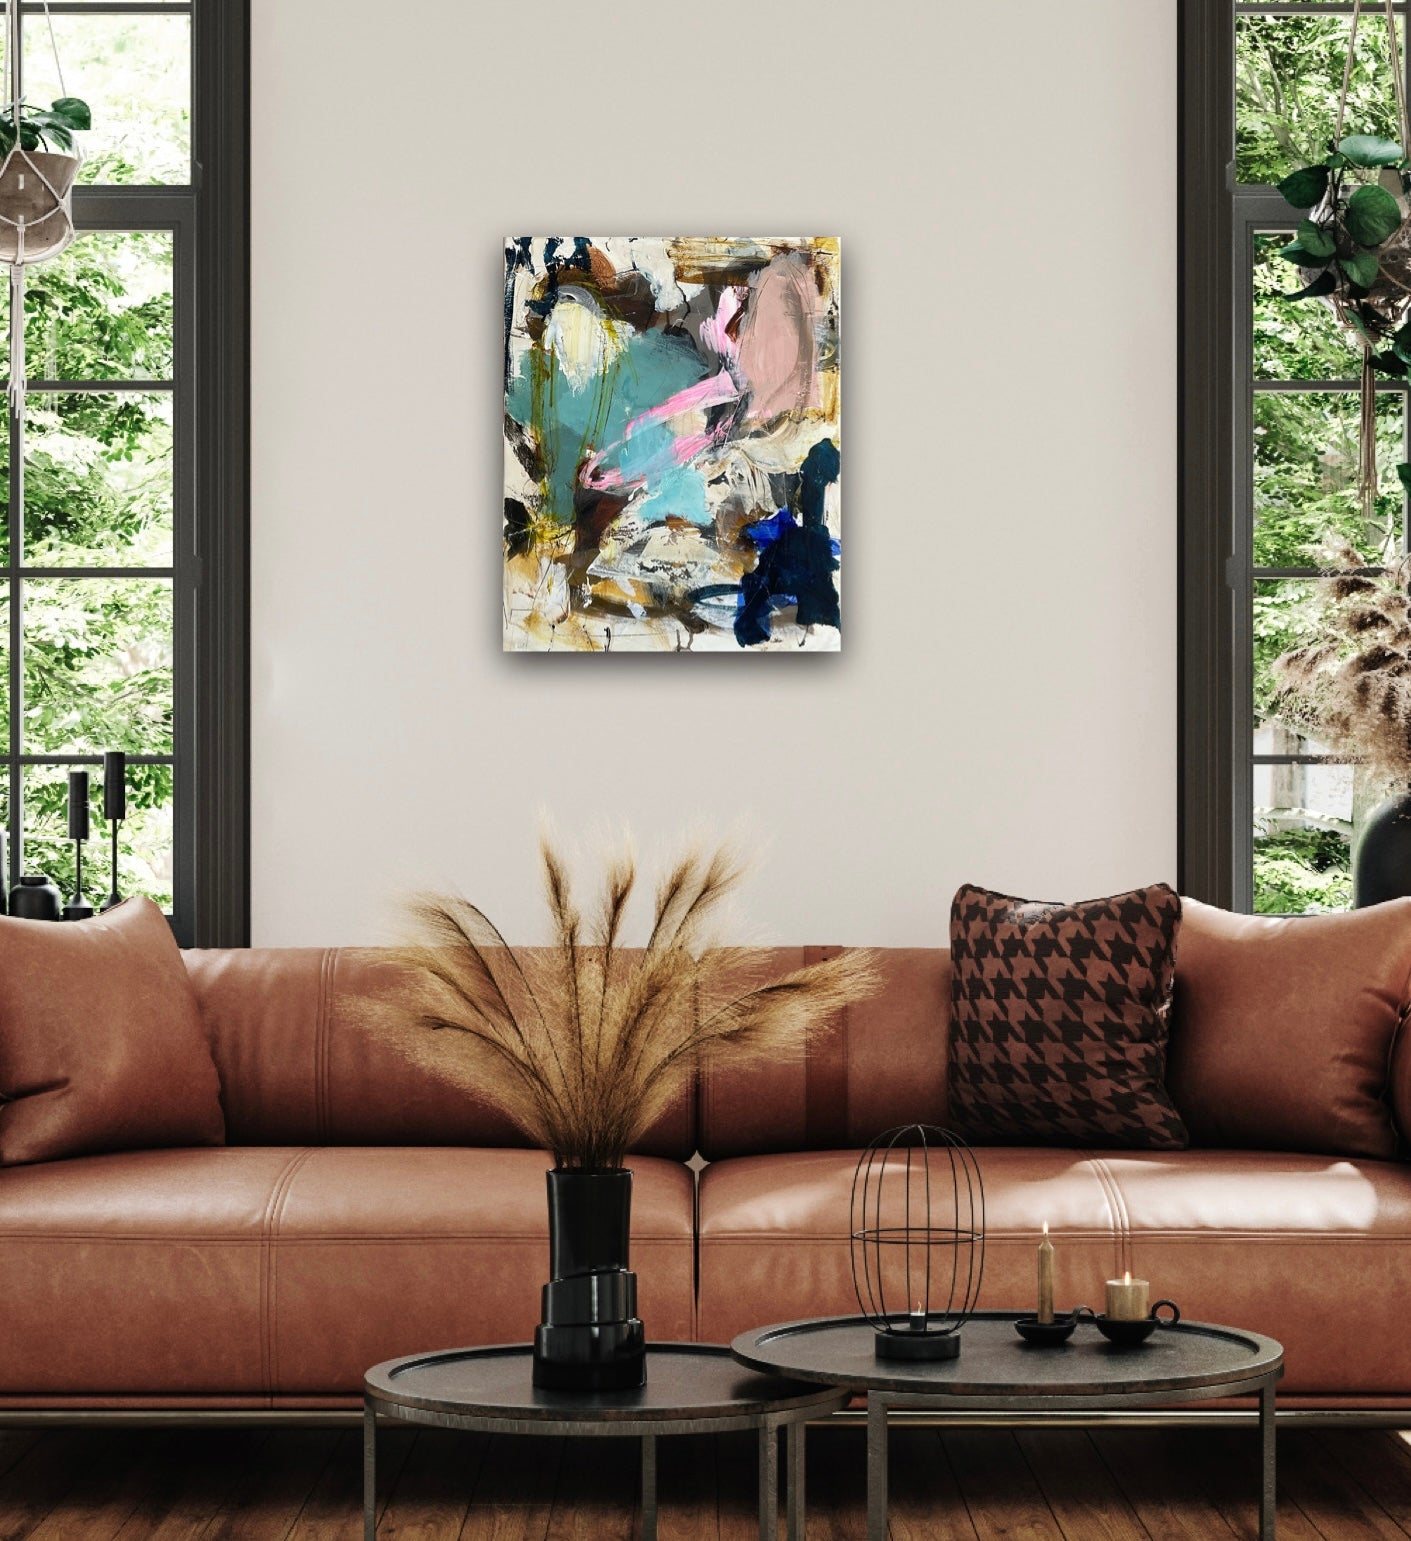 Abstrakt maleri, 50x40 cm, "Joy” by Lone Reedtz , Abstrakt ekspressivt akrylmaleri på lærred